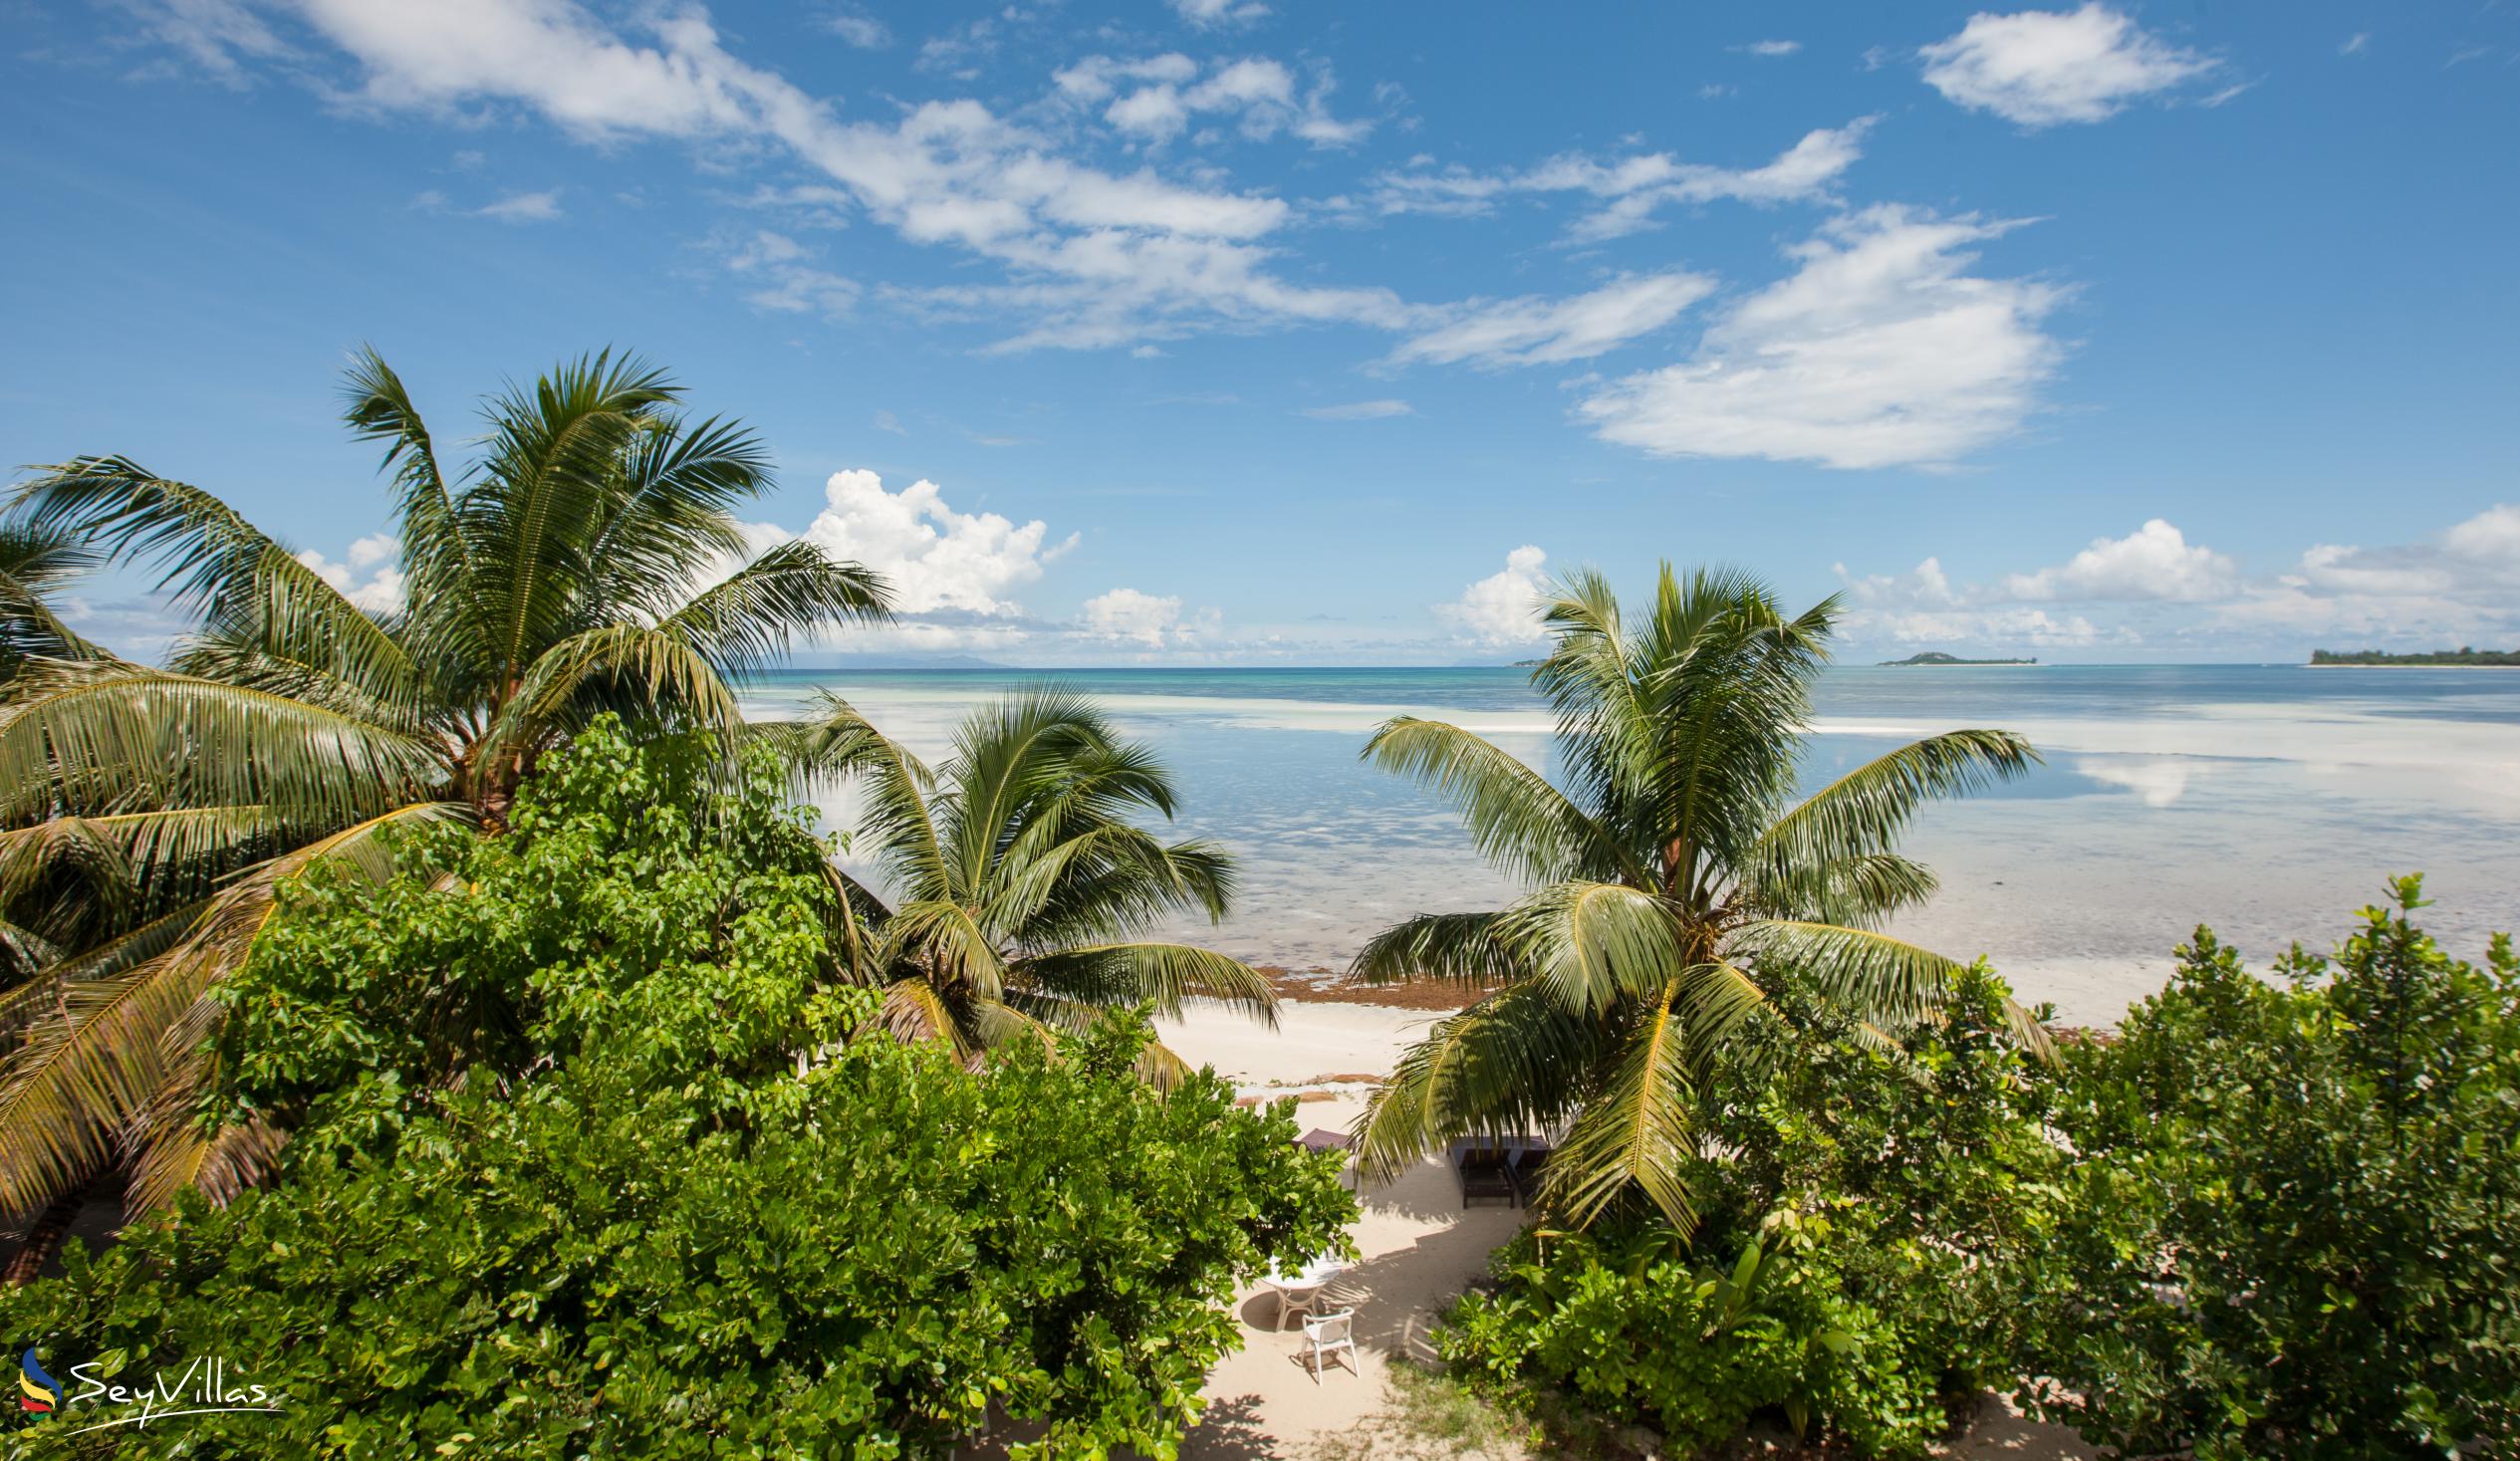 Foto 63: Palm Beach Hotel - Location - Praslin (Seychelles)